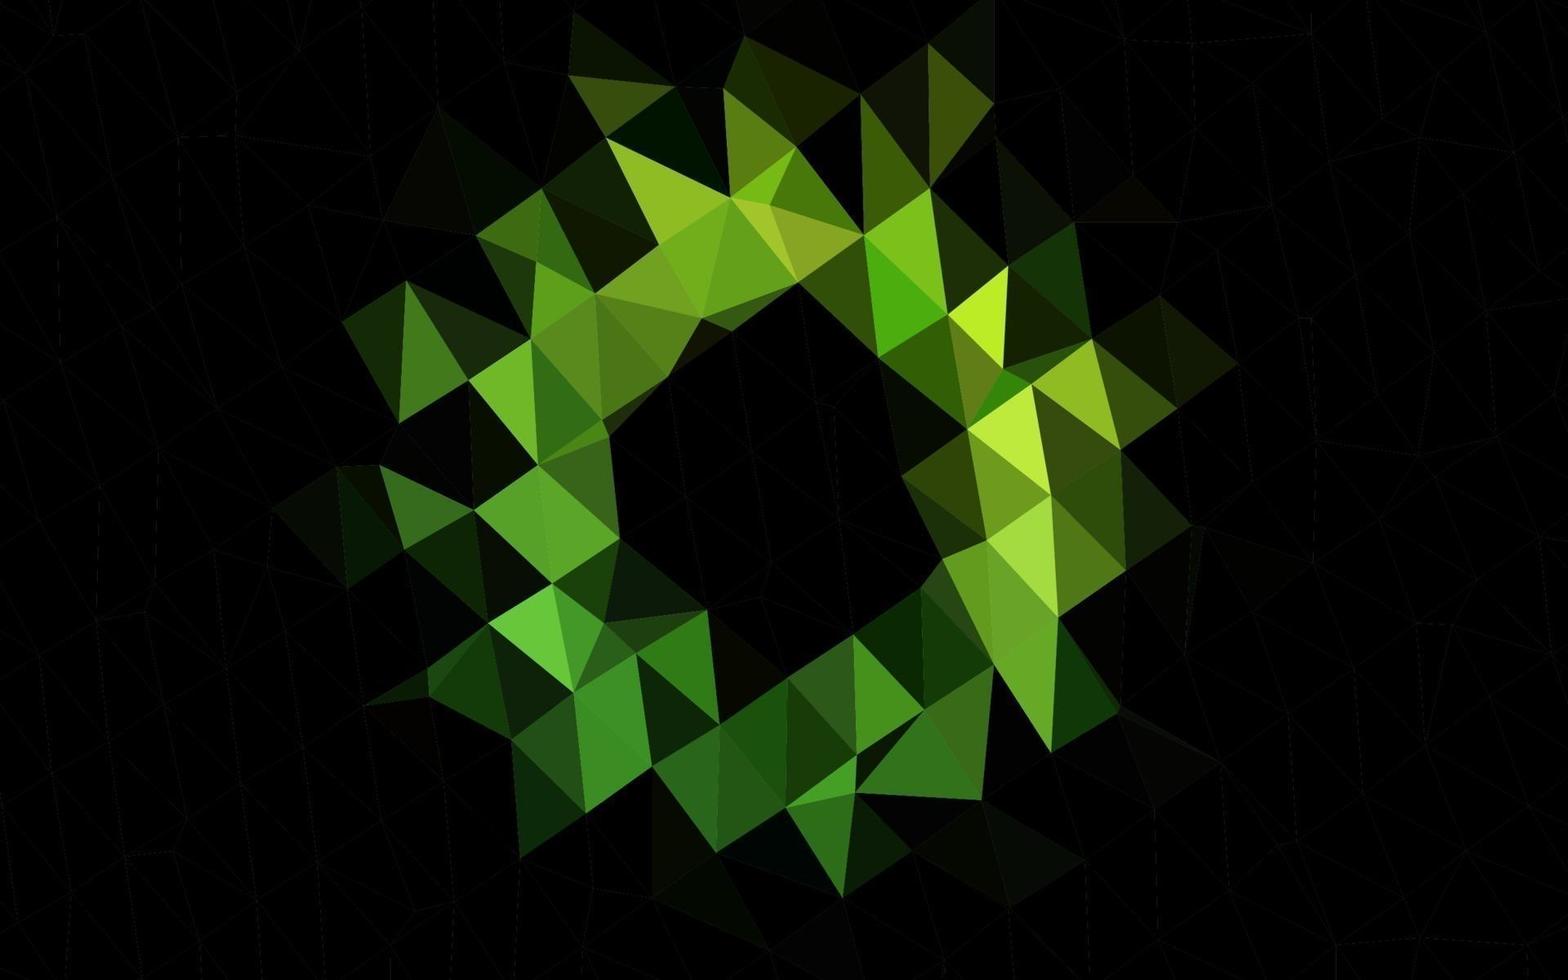 hellgrüne Vektor abstrakte polygonale Textur.